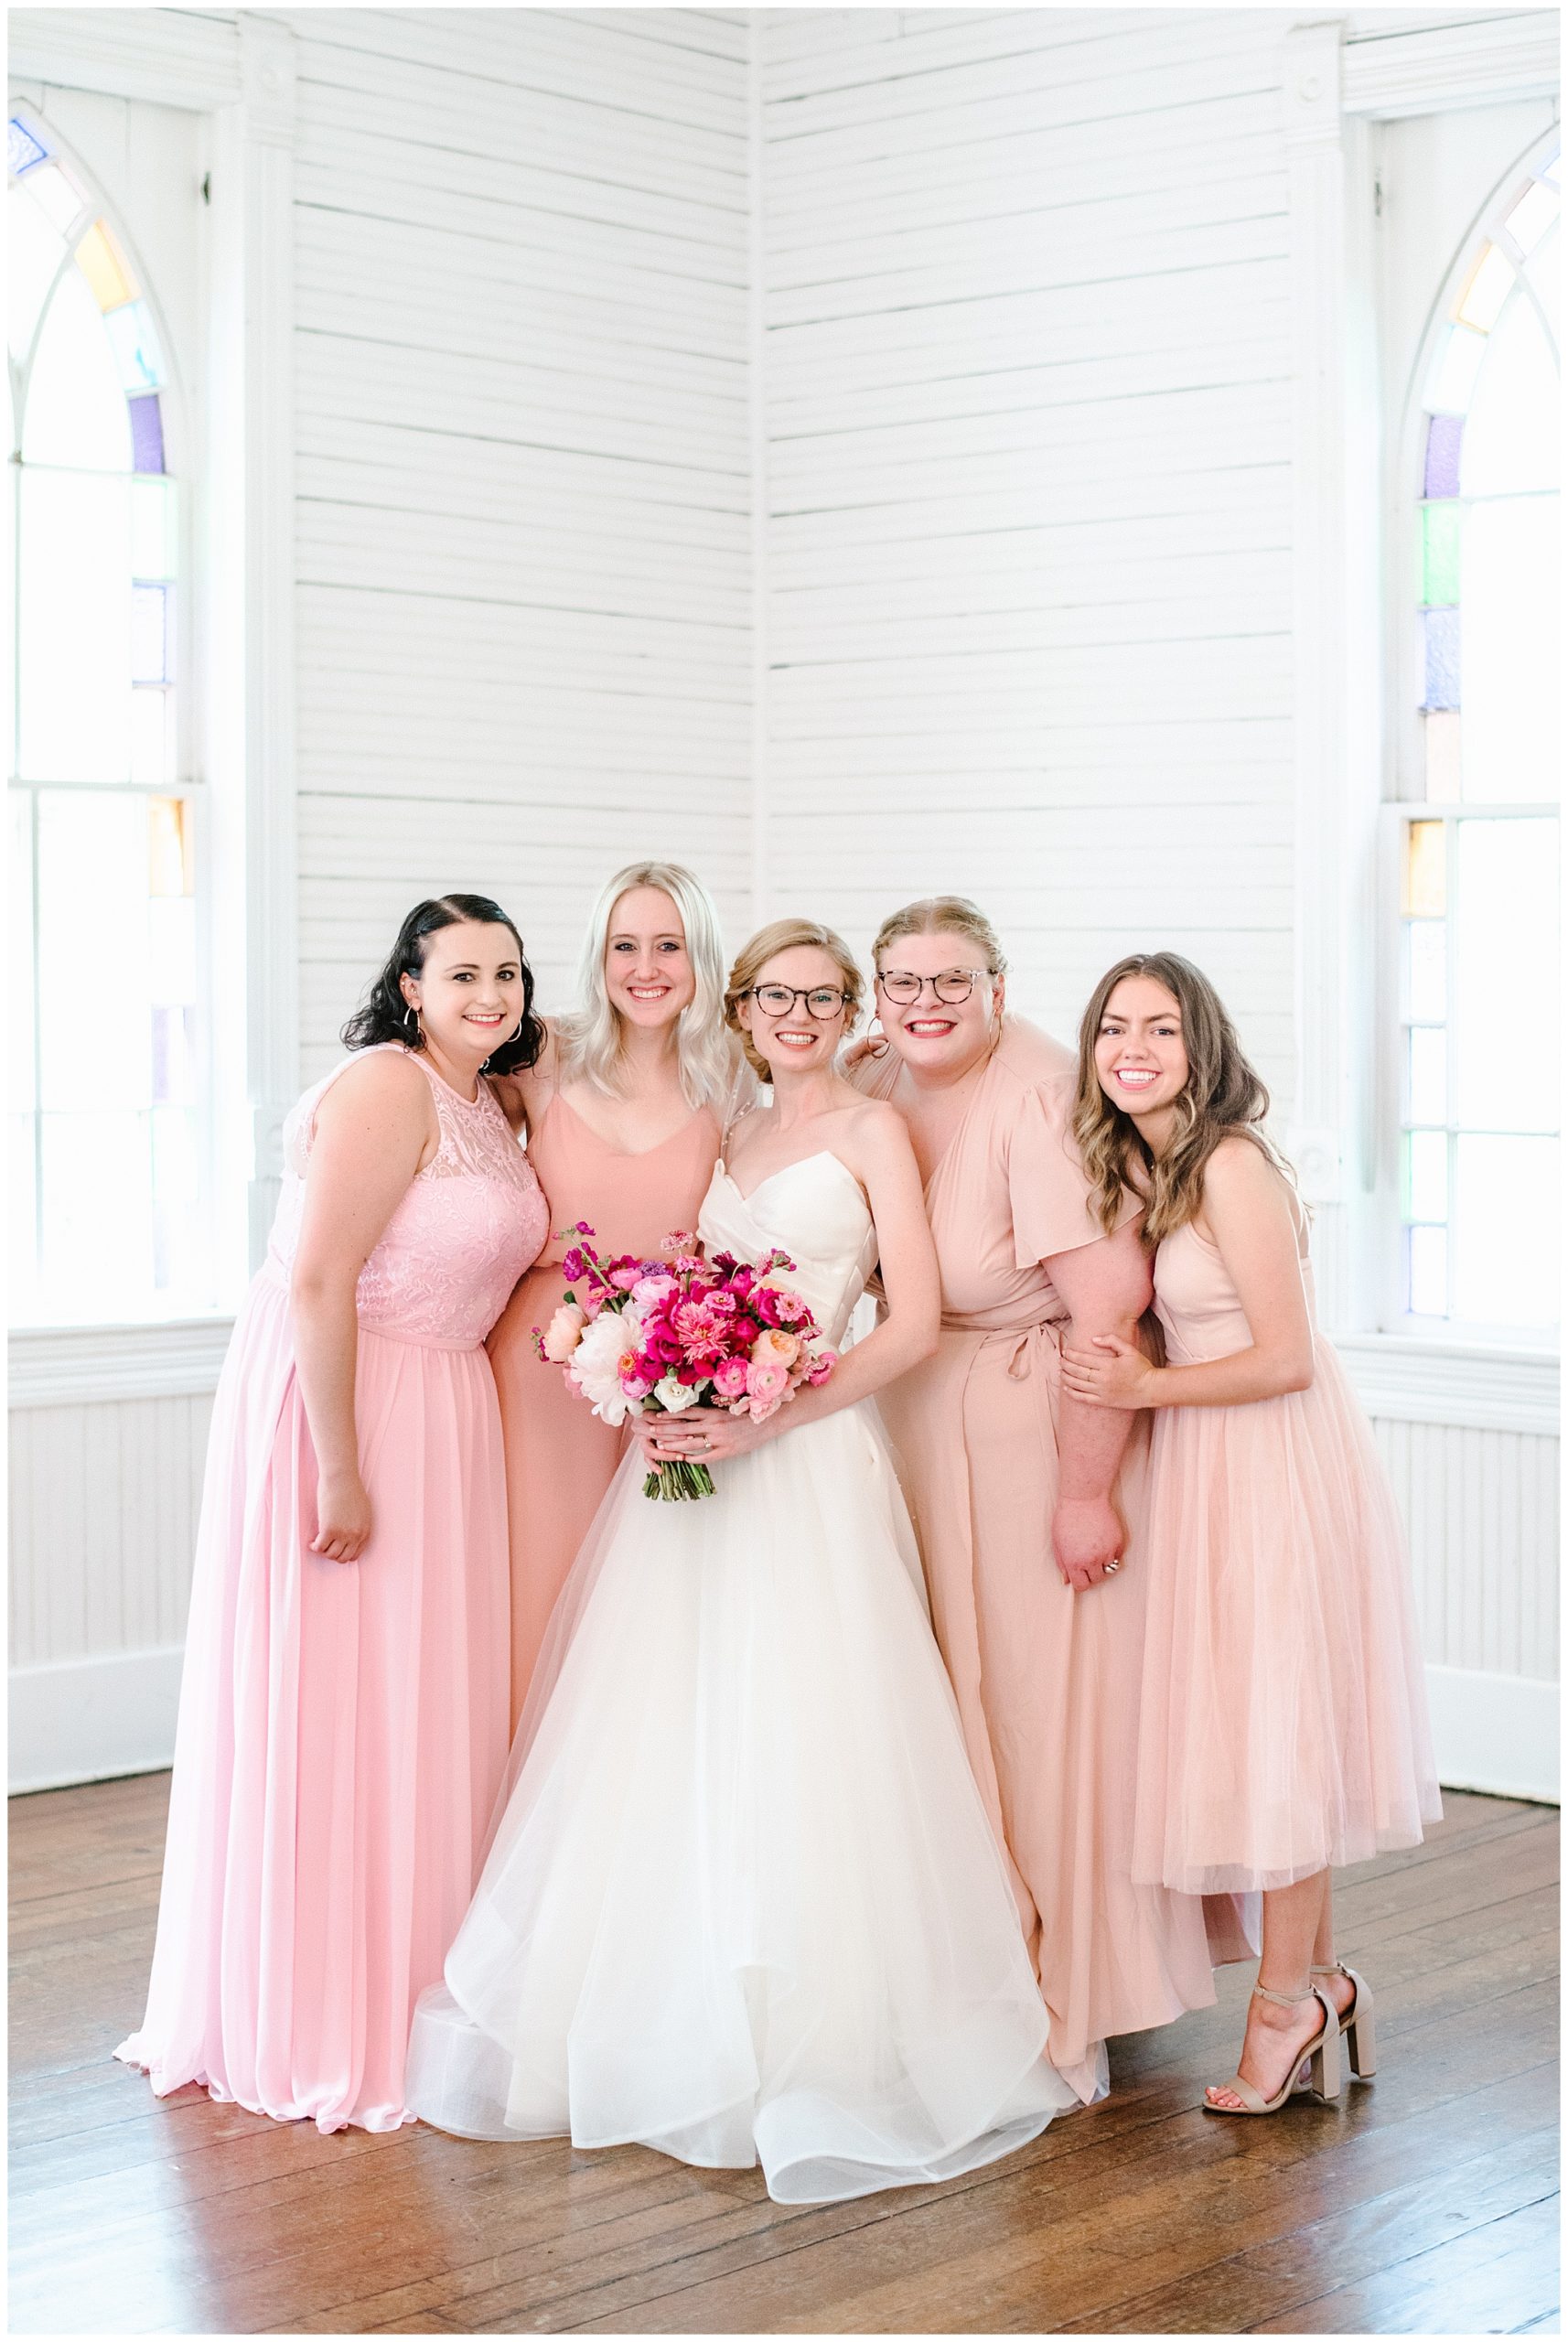 beautiful blush bridesmaids and bride in unique ballgown